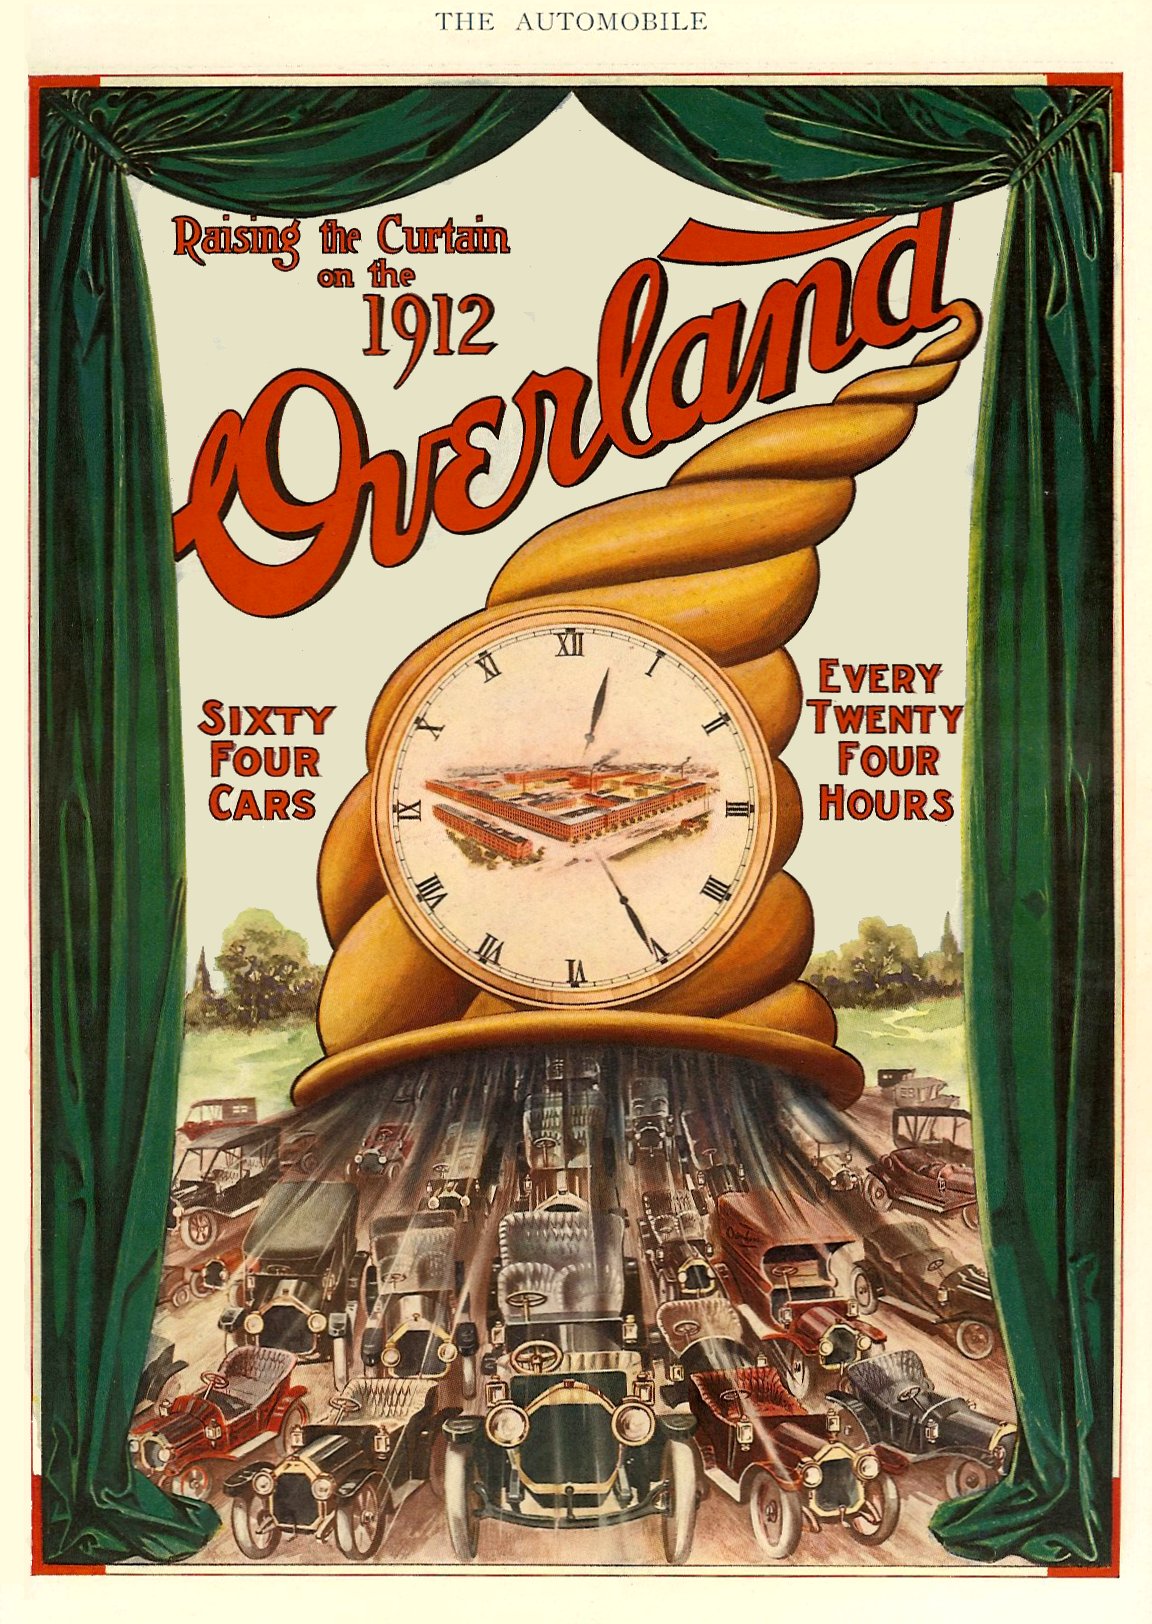 1912 American Auto Advertising